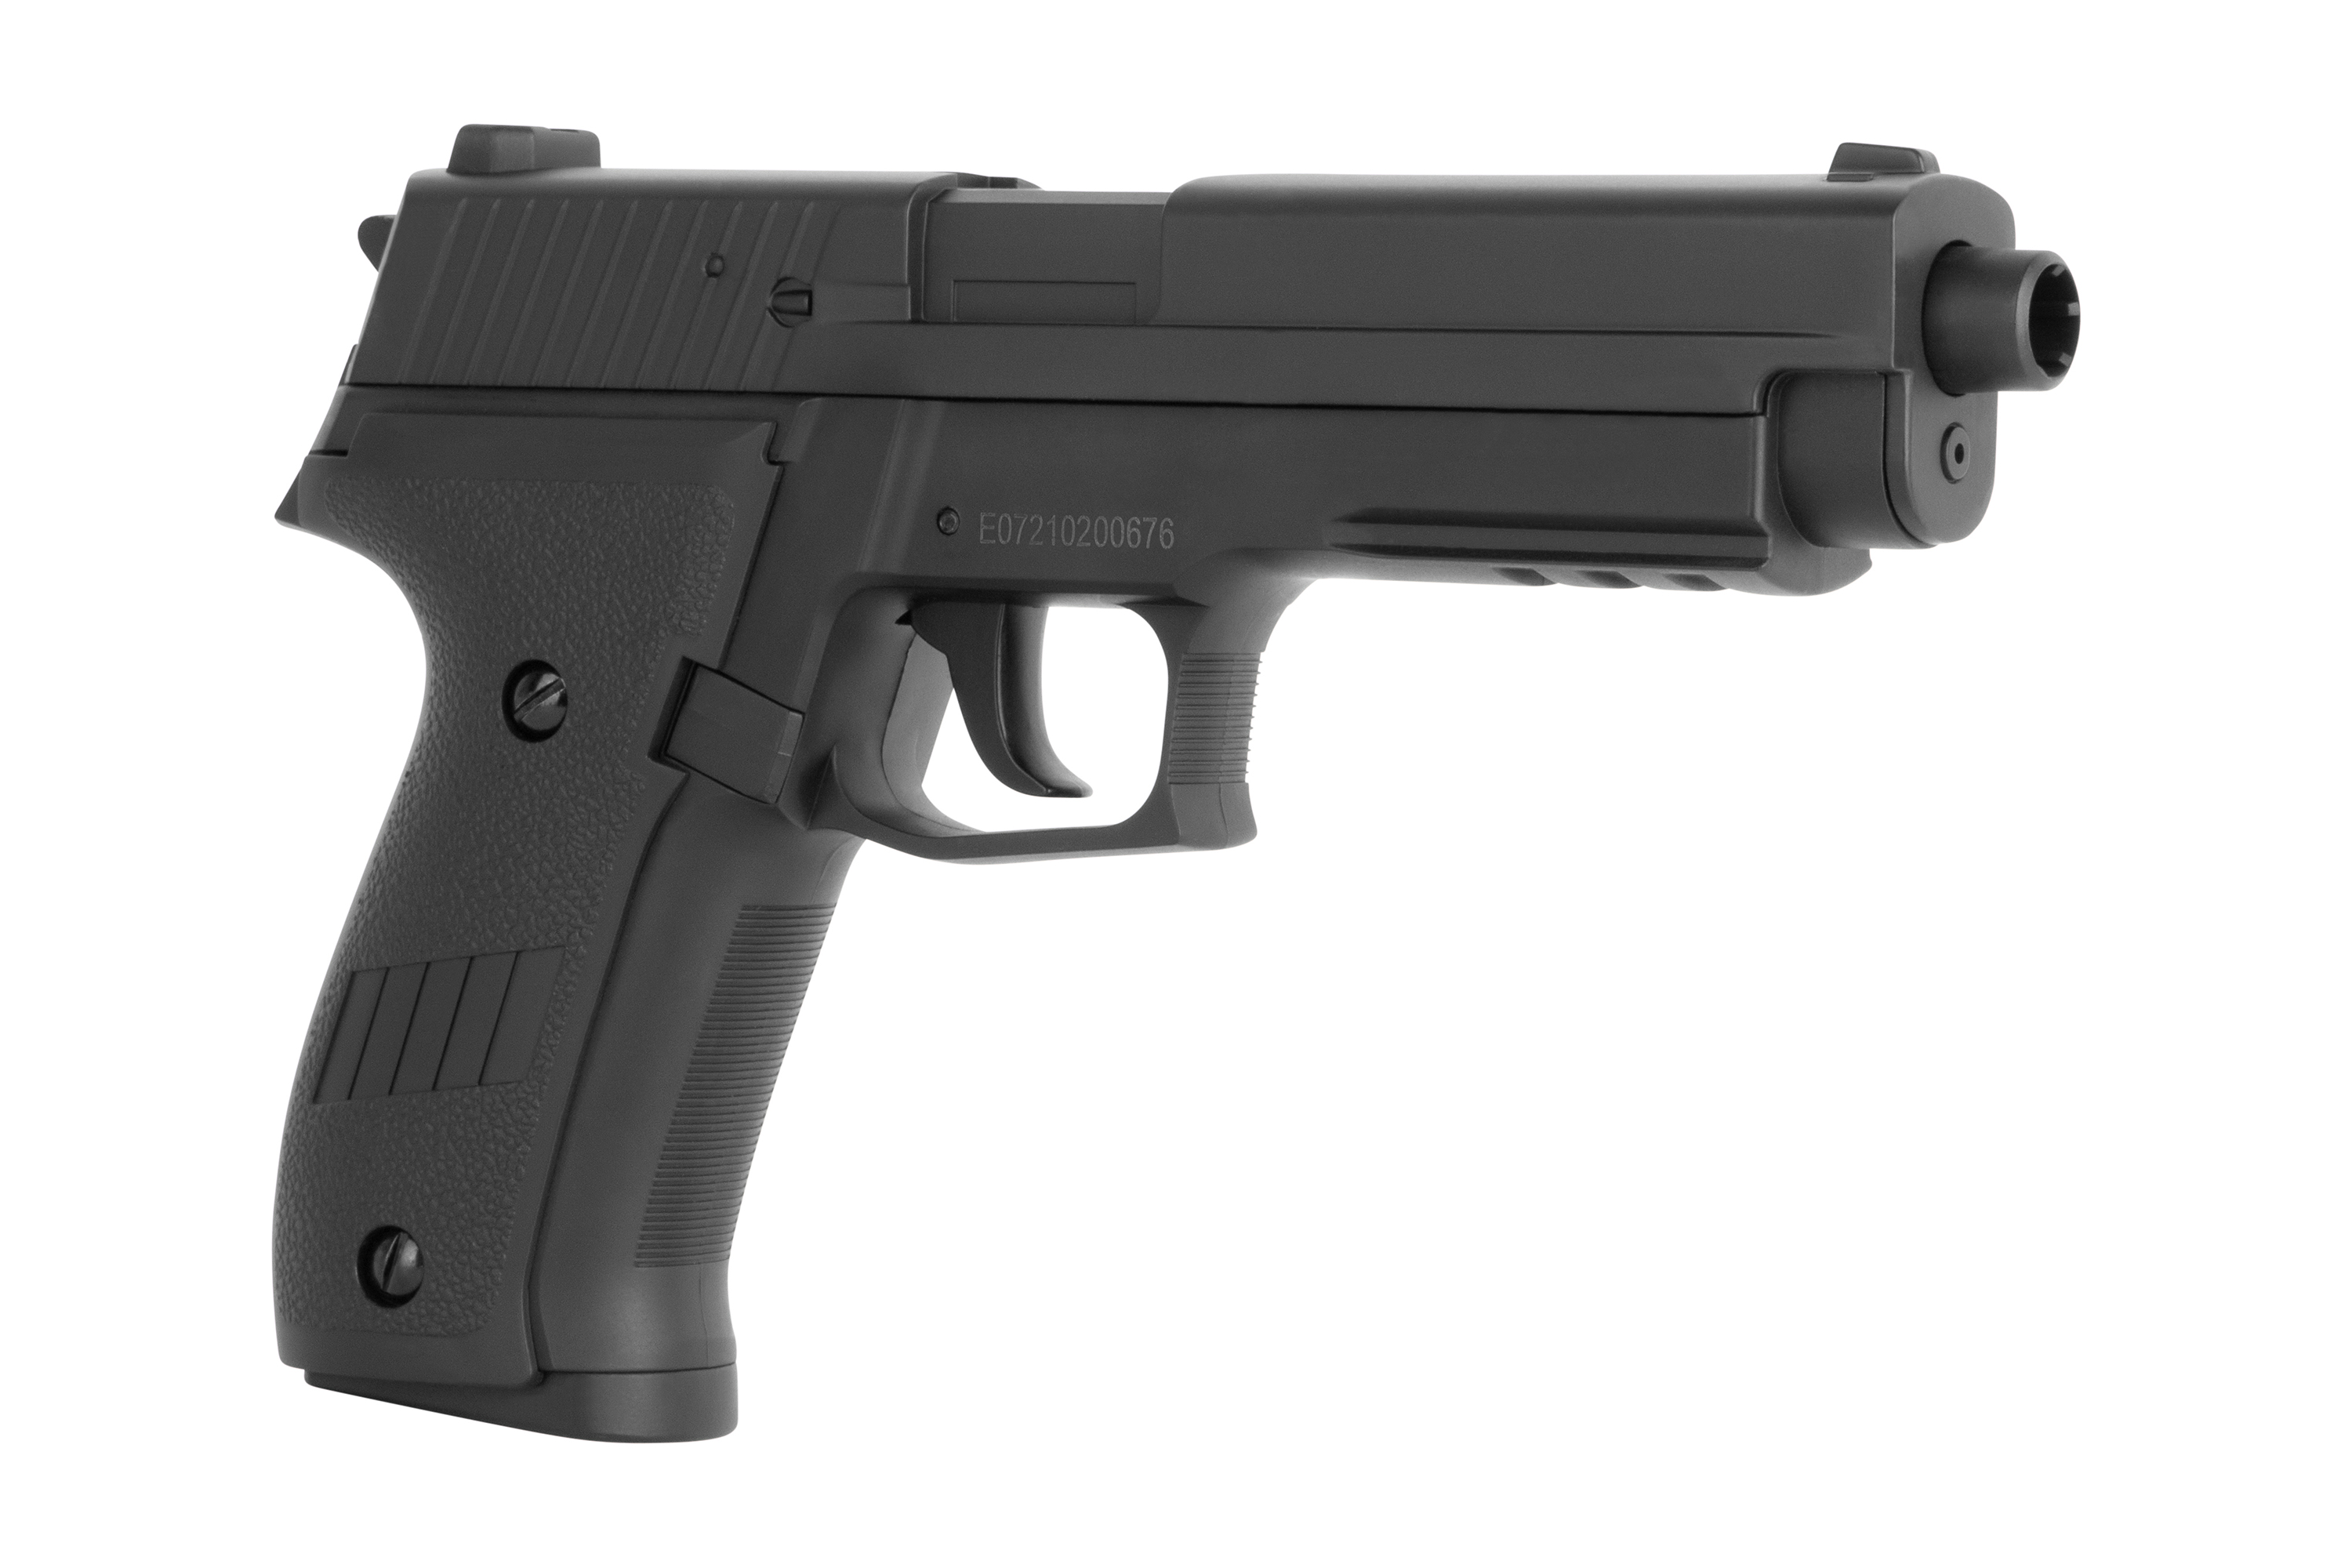 Swiss Arms Navy Pistol Schwarz 6mm - Airsoft AEP < 0,5 Joule